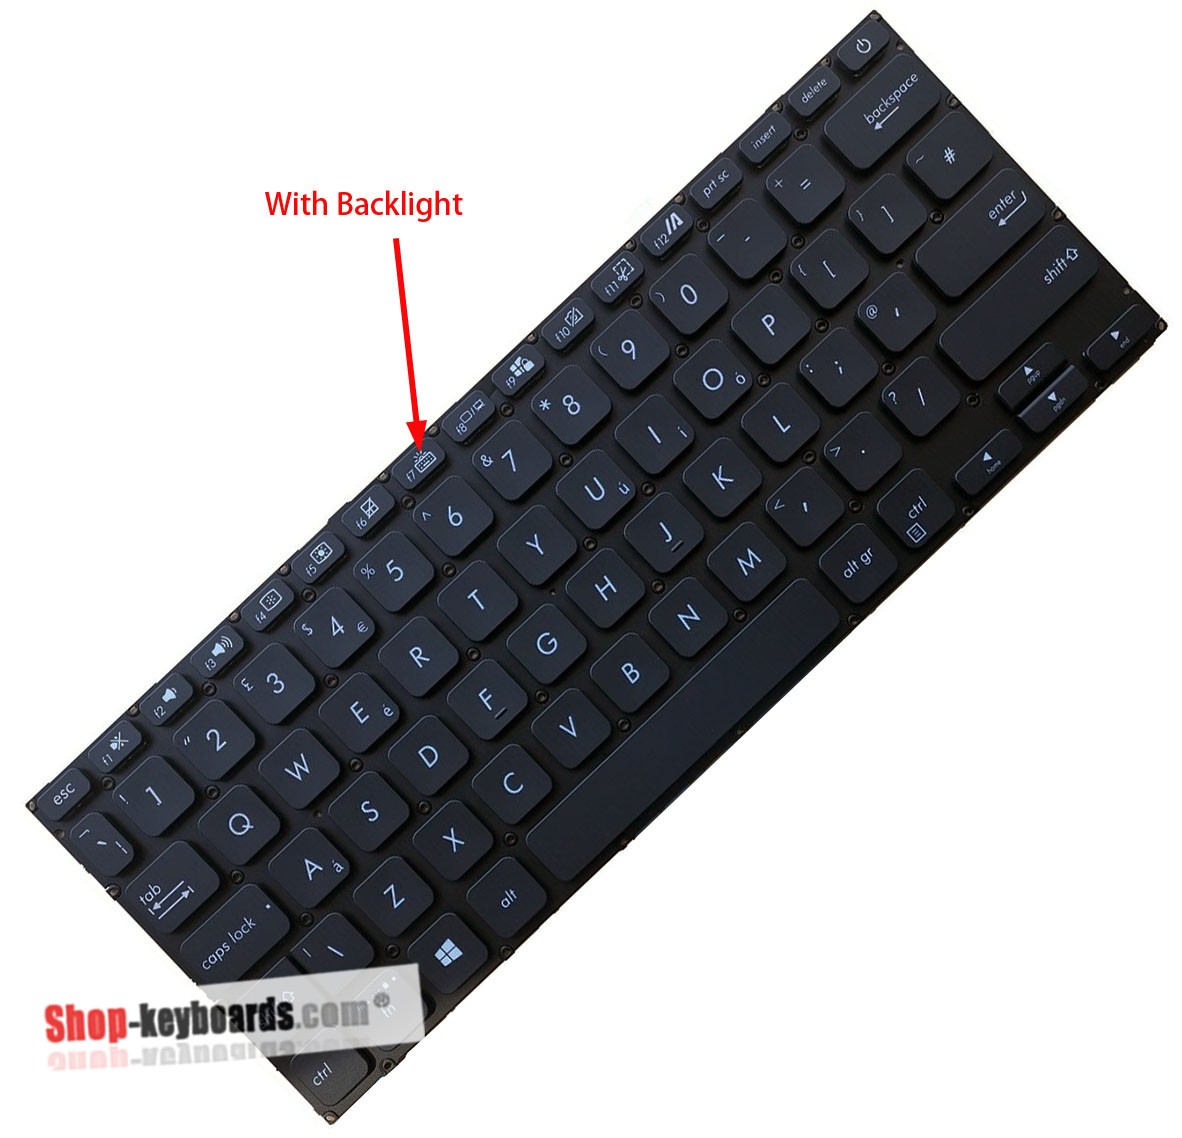 Asus 0KNB0-3108UK00 Keyboard replacement